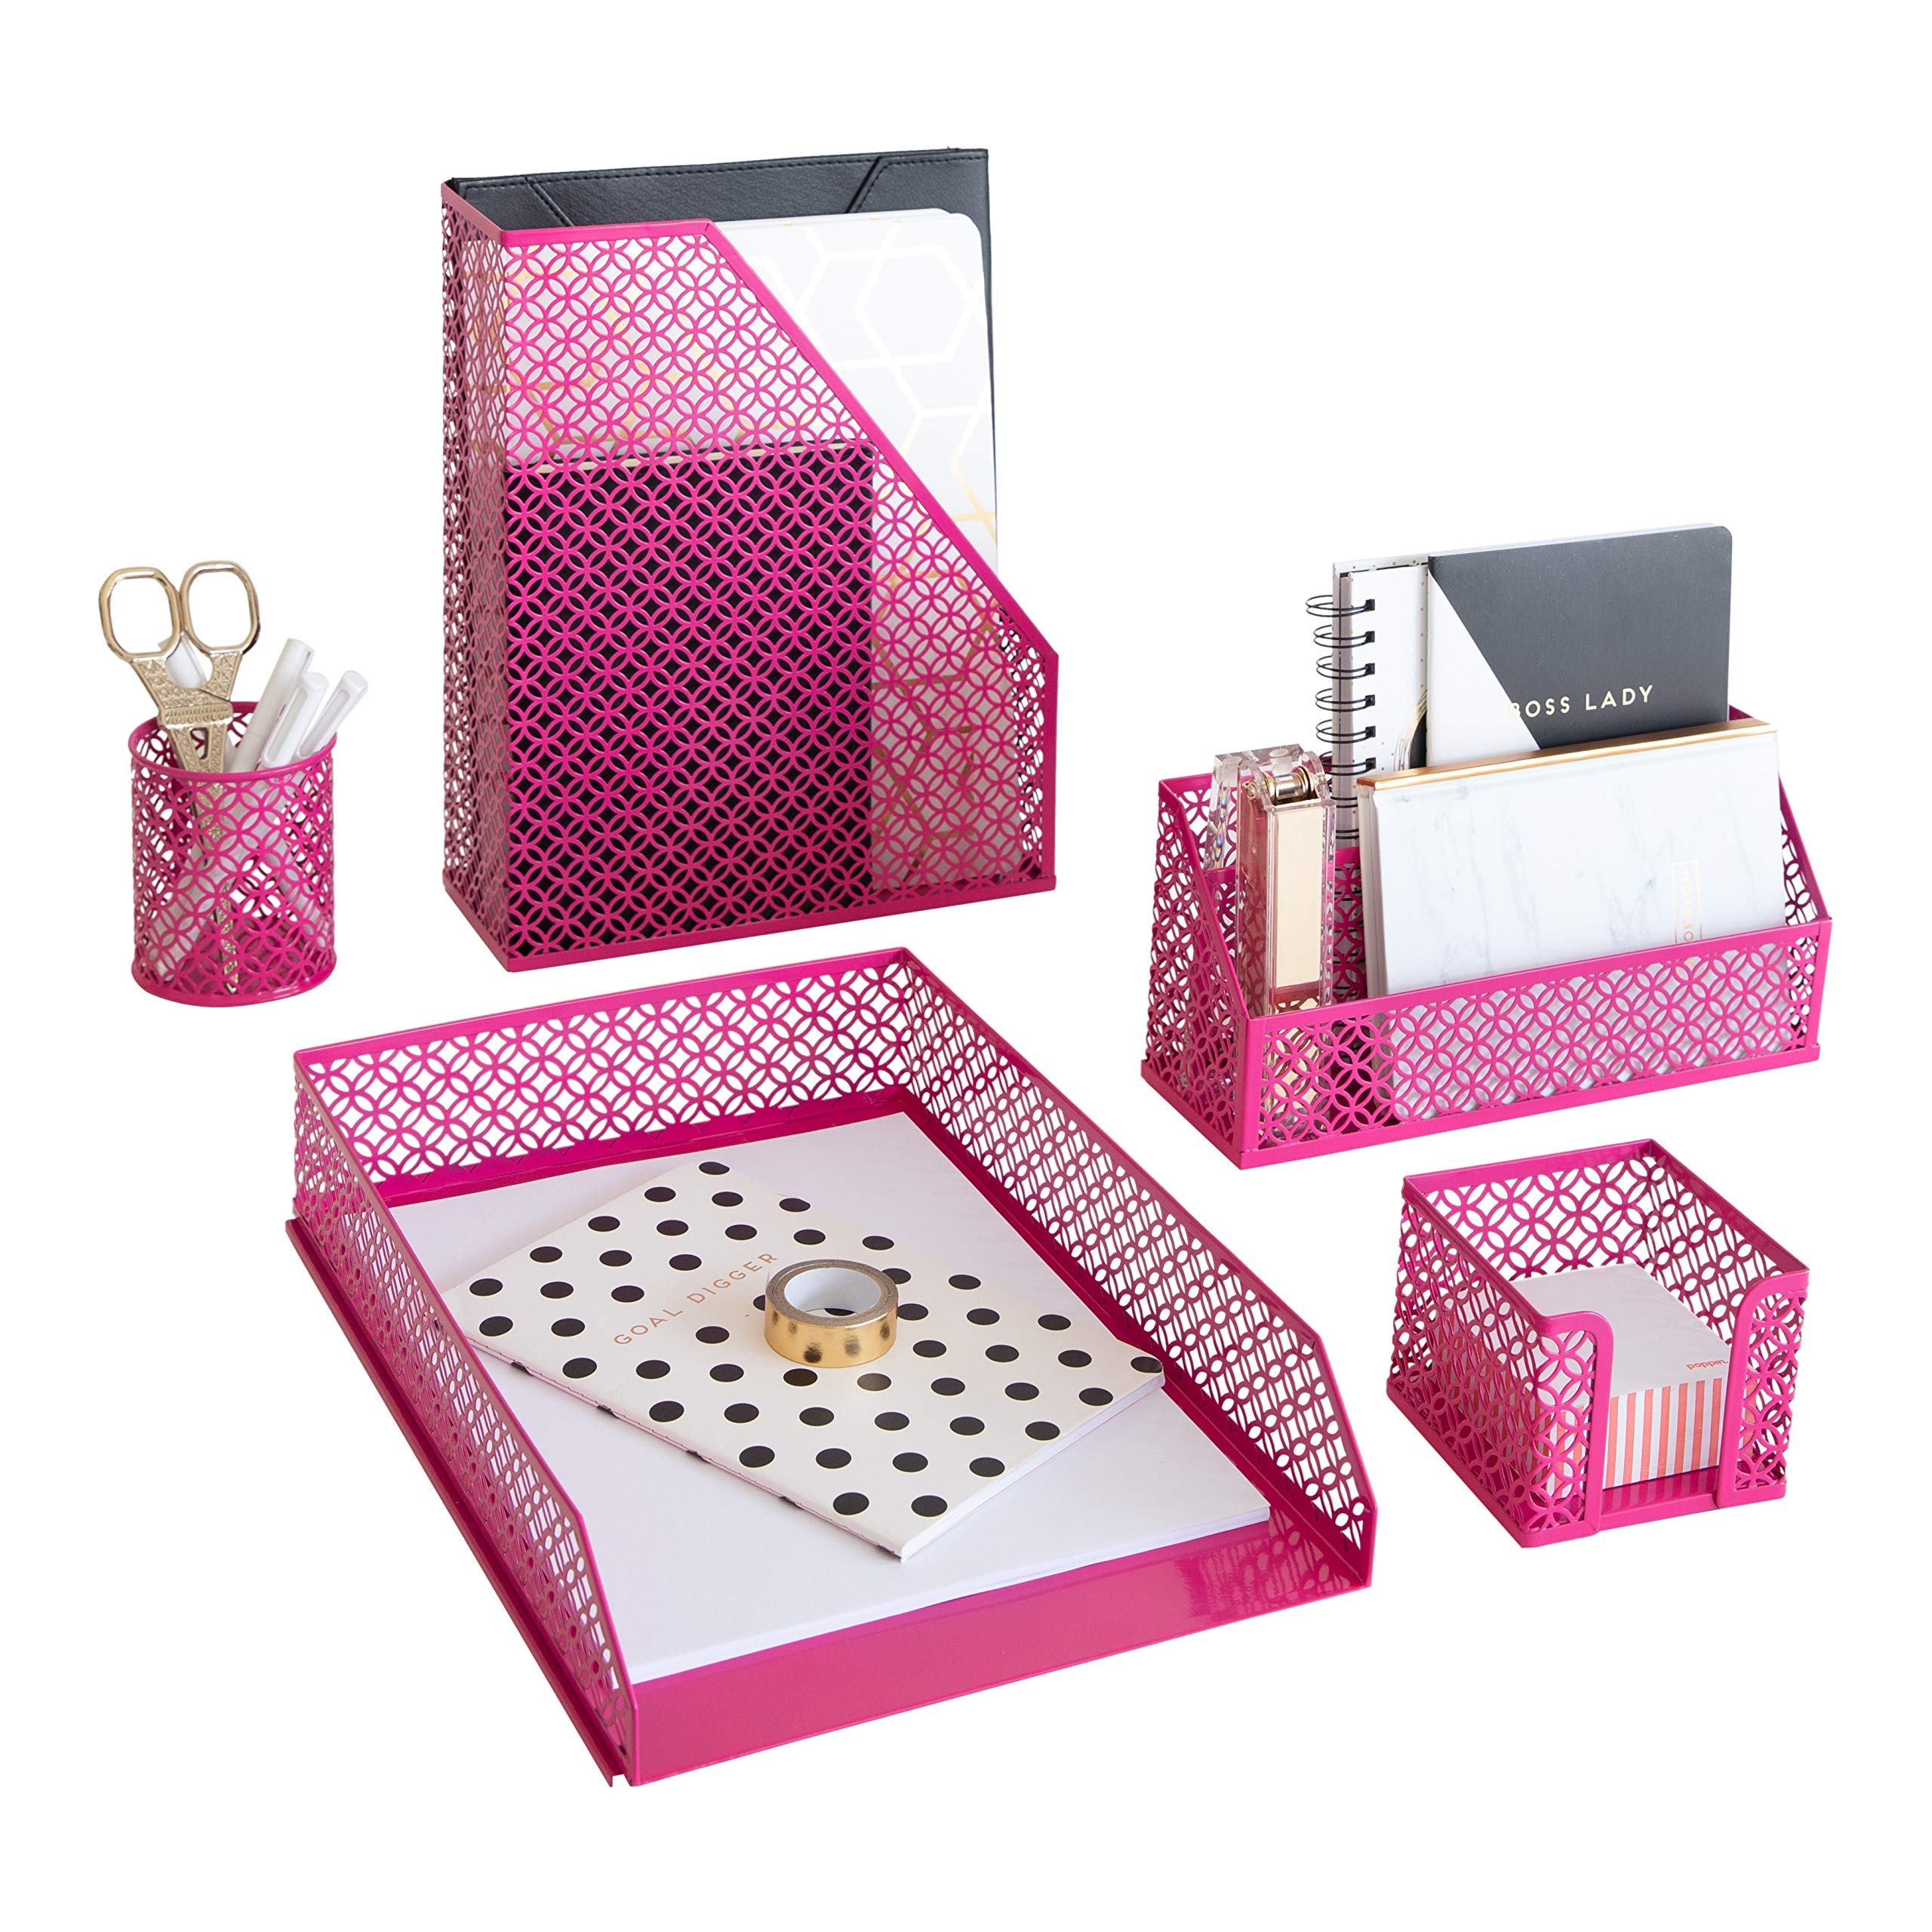 Book Cover Blu Monaco Pink Office Supplies Hot Pink Desk Accessories for Women Office - 5 Piece Cute Pink Desk Organizer Set